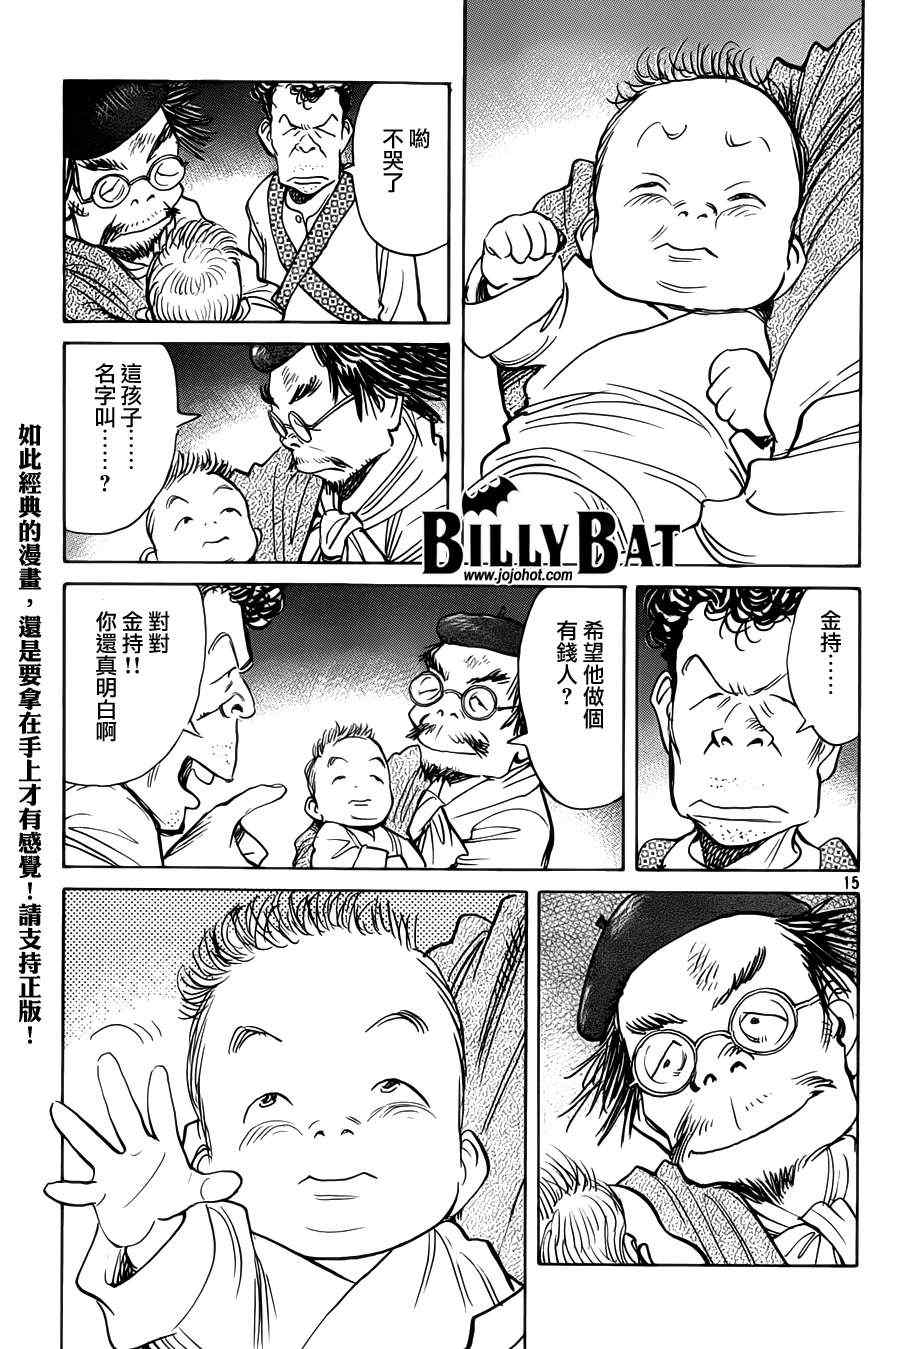 Billy_Bat - 第85話 - 5